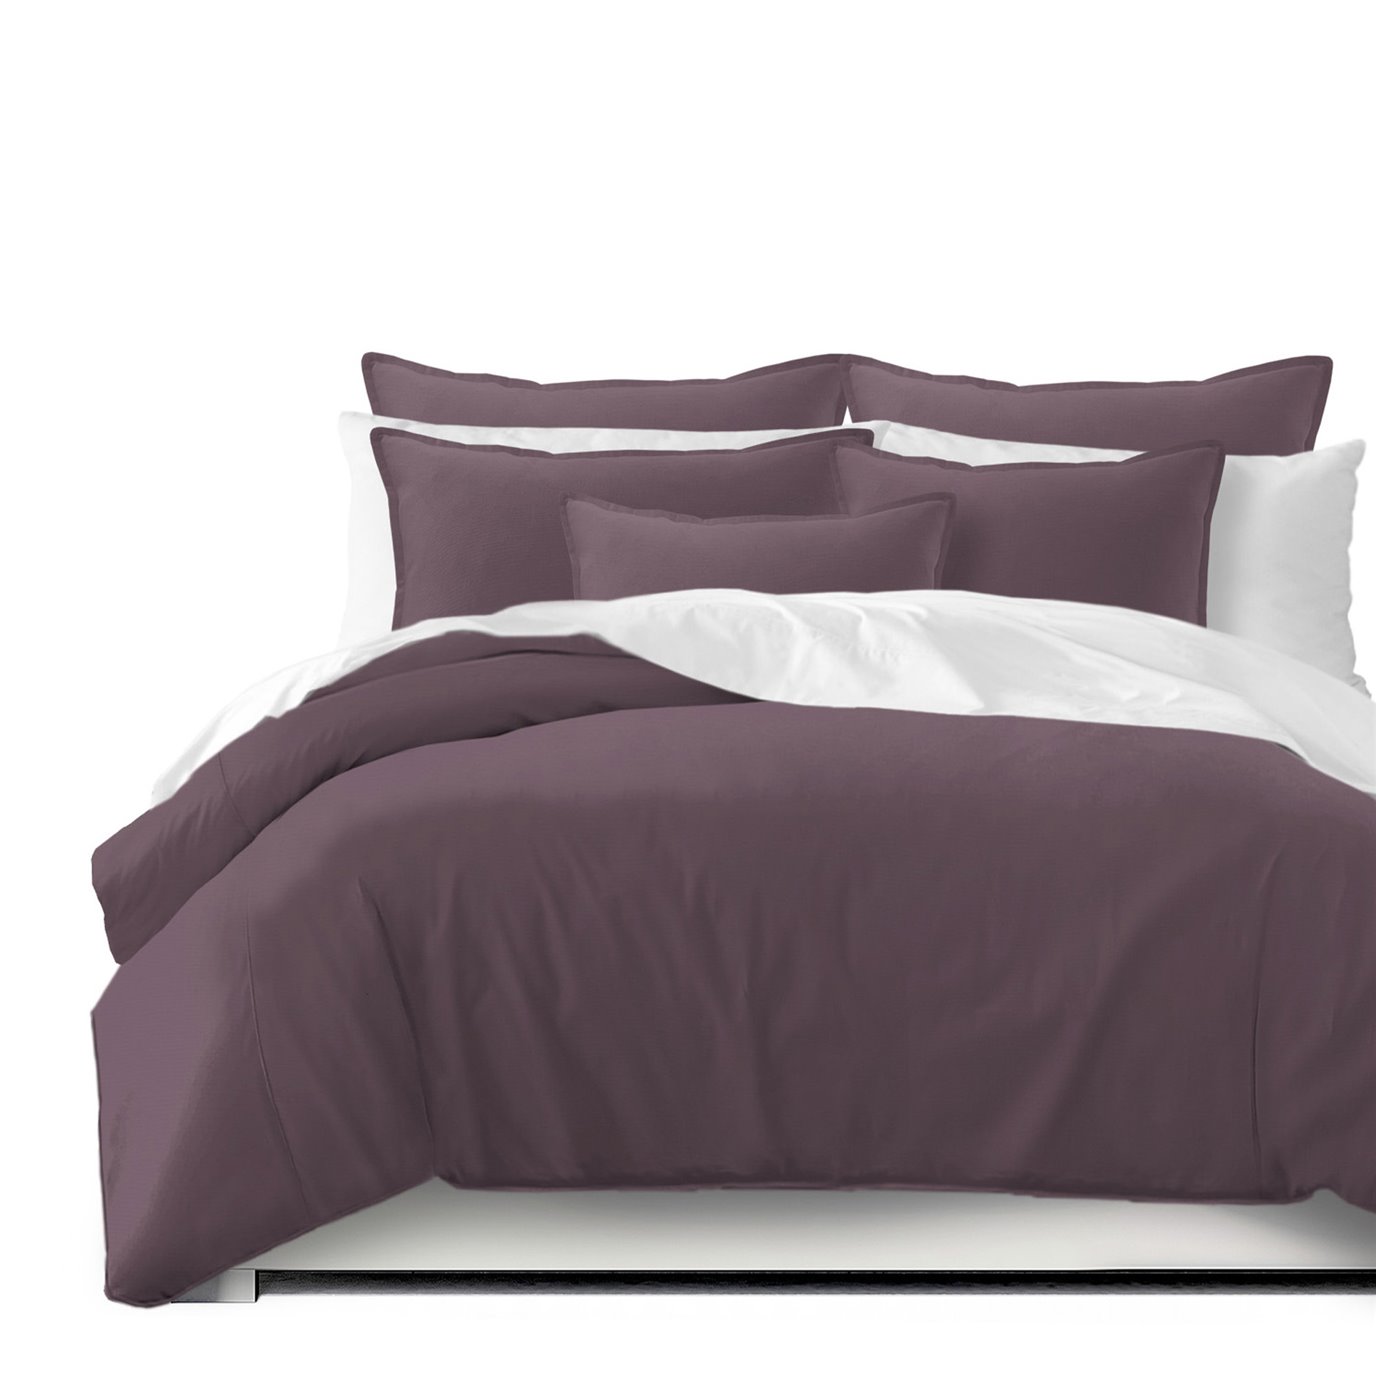 Braxton Purple Grape Coverlet and Pillow Sham(s) Set - Size Super Queen